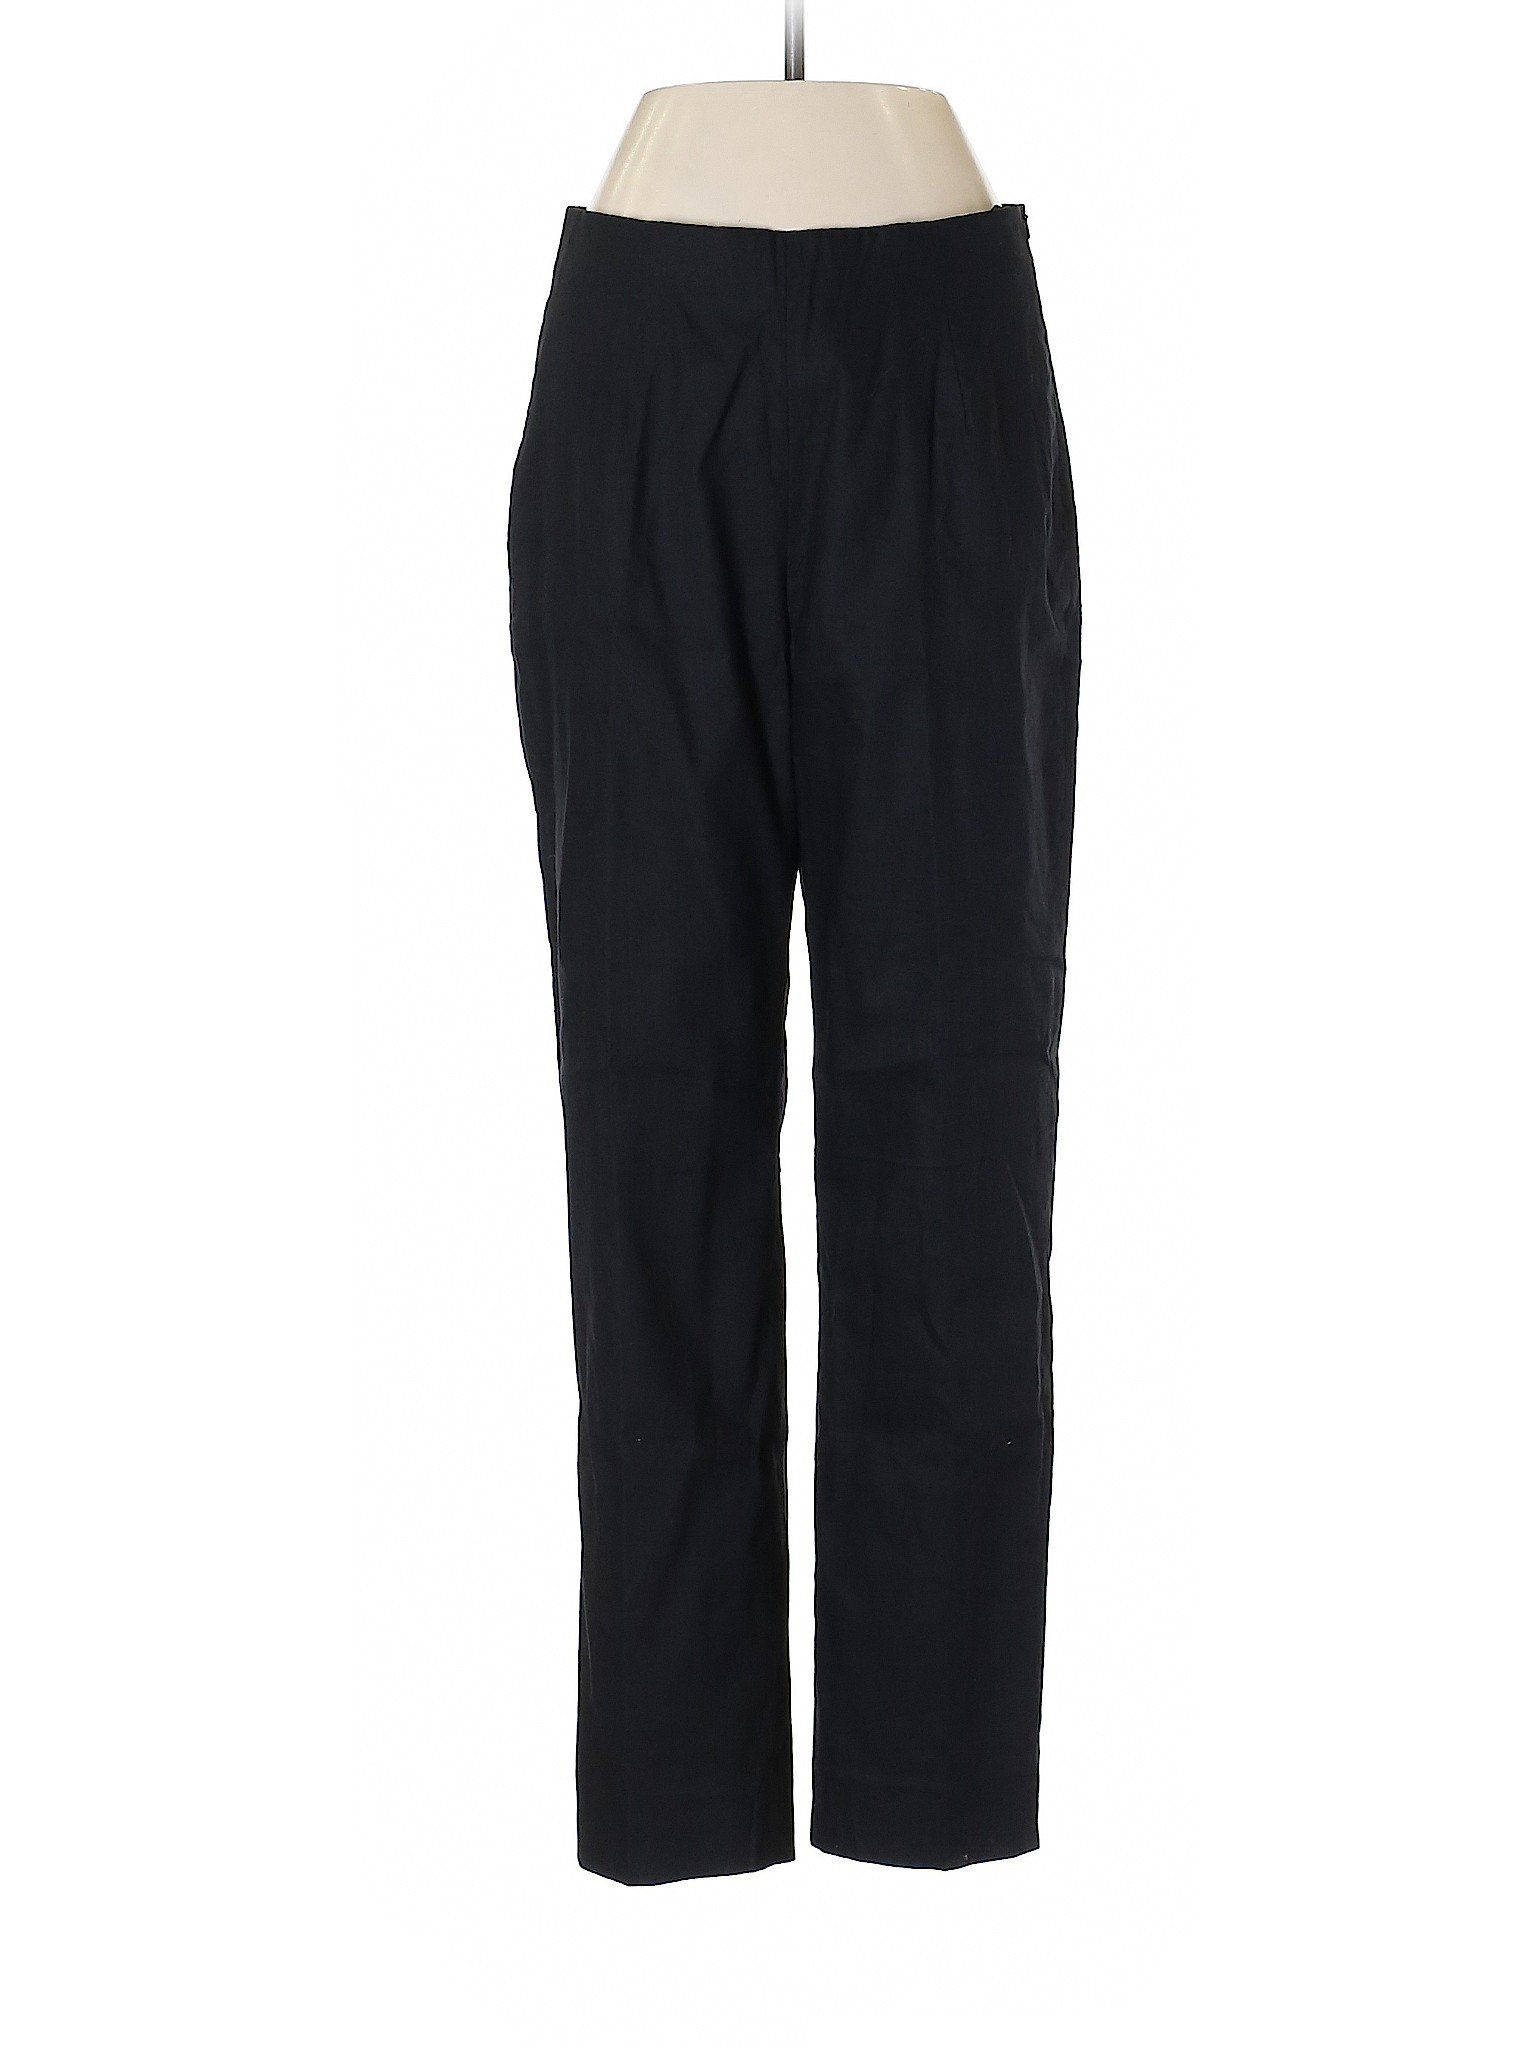 Zozo Women Black Dress Pants 4 | eBay